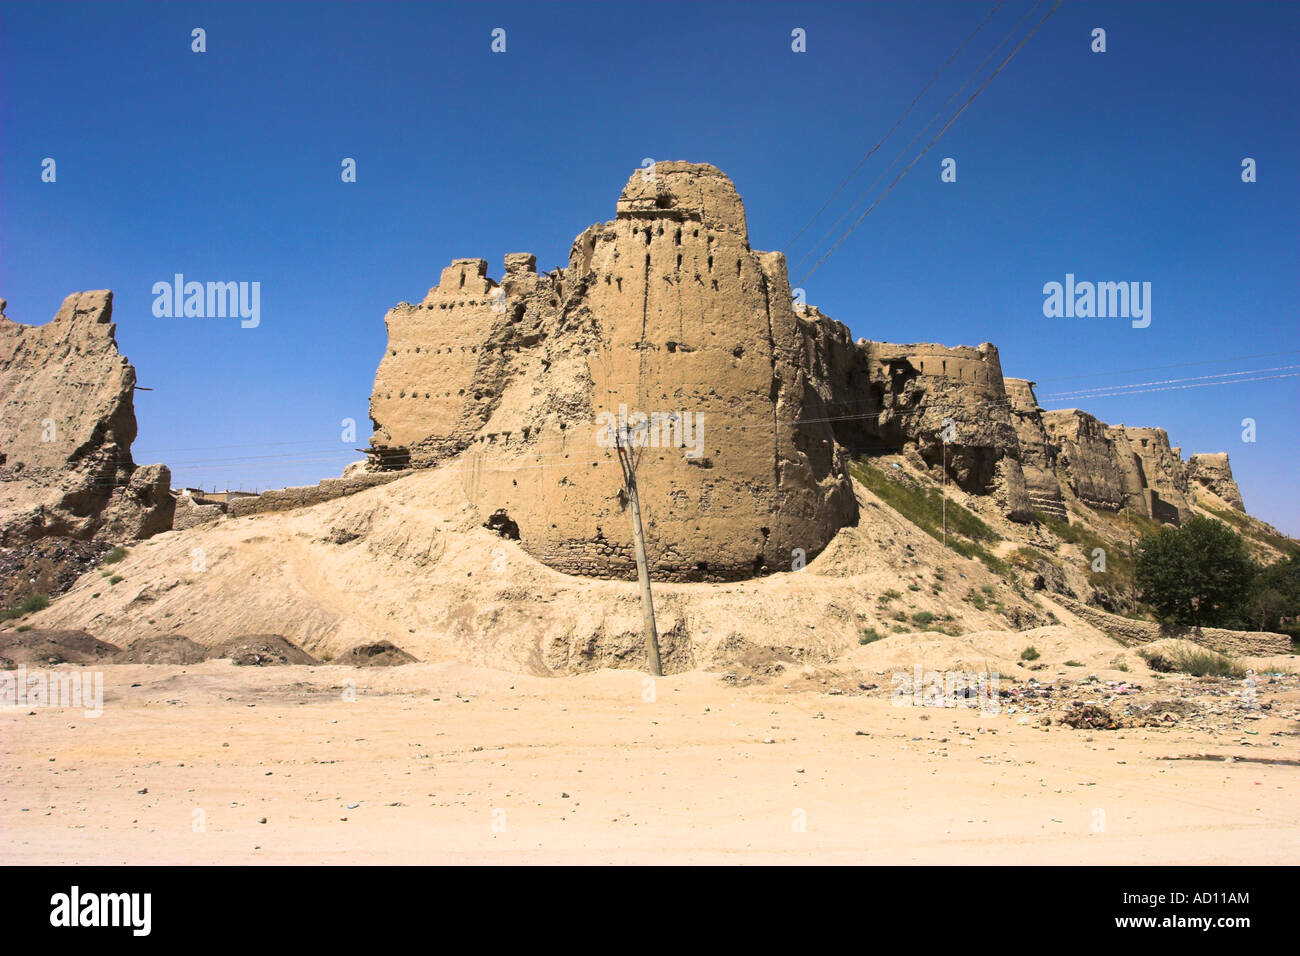 Afghanistan, Ghazni, Ancient walls of Citadel Stock Photo